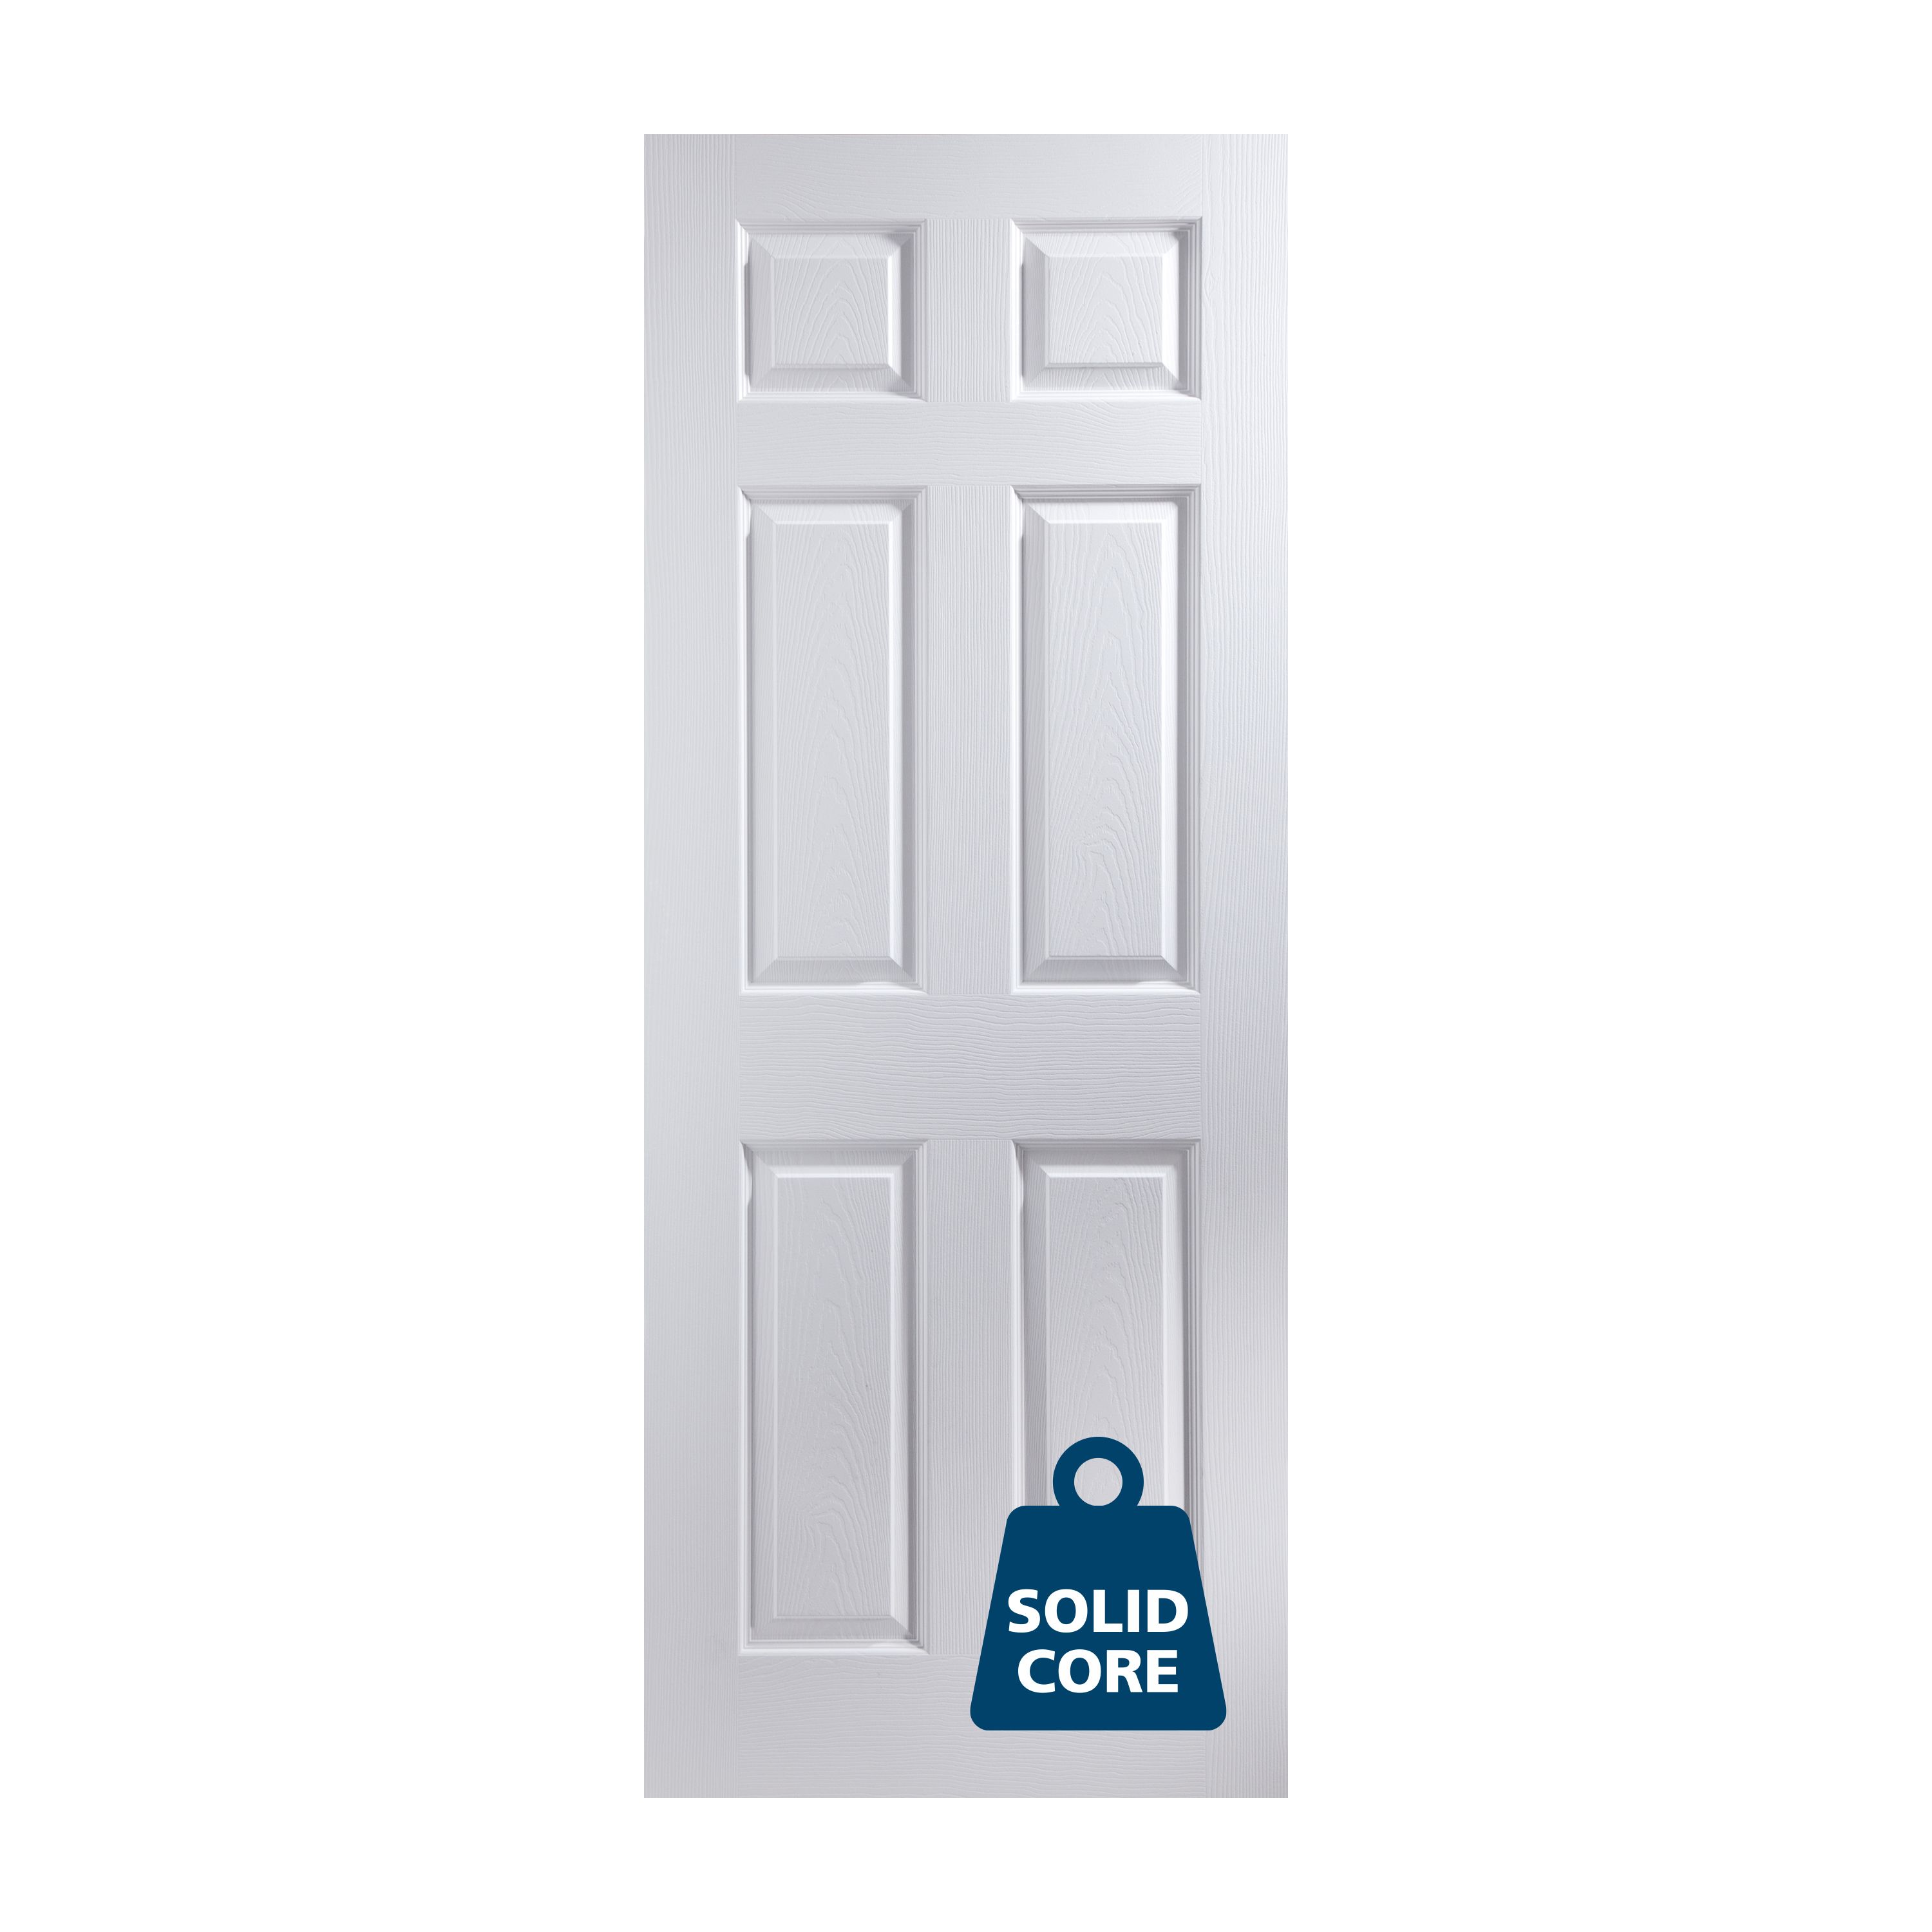 Jeld-Wen 6 panel Solid core Unglazed Contemporary White Woodgrain effect Internal Door, (H)1981mm (W)610mm (T)35mm